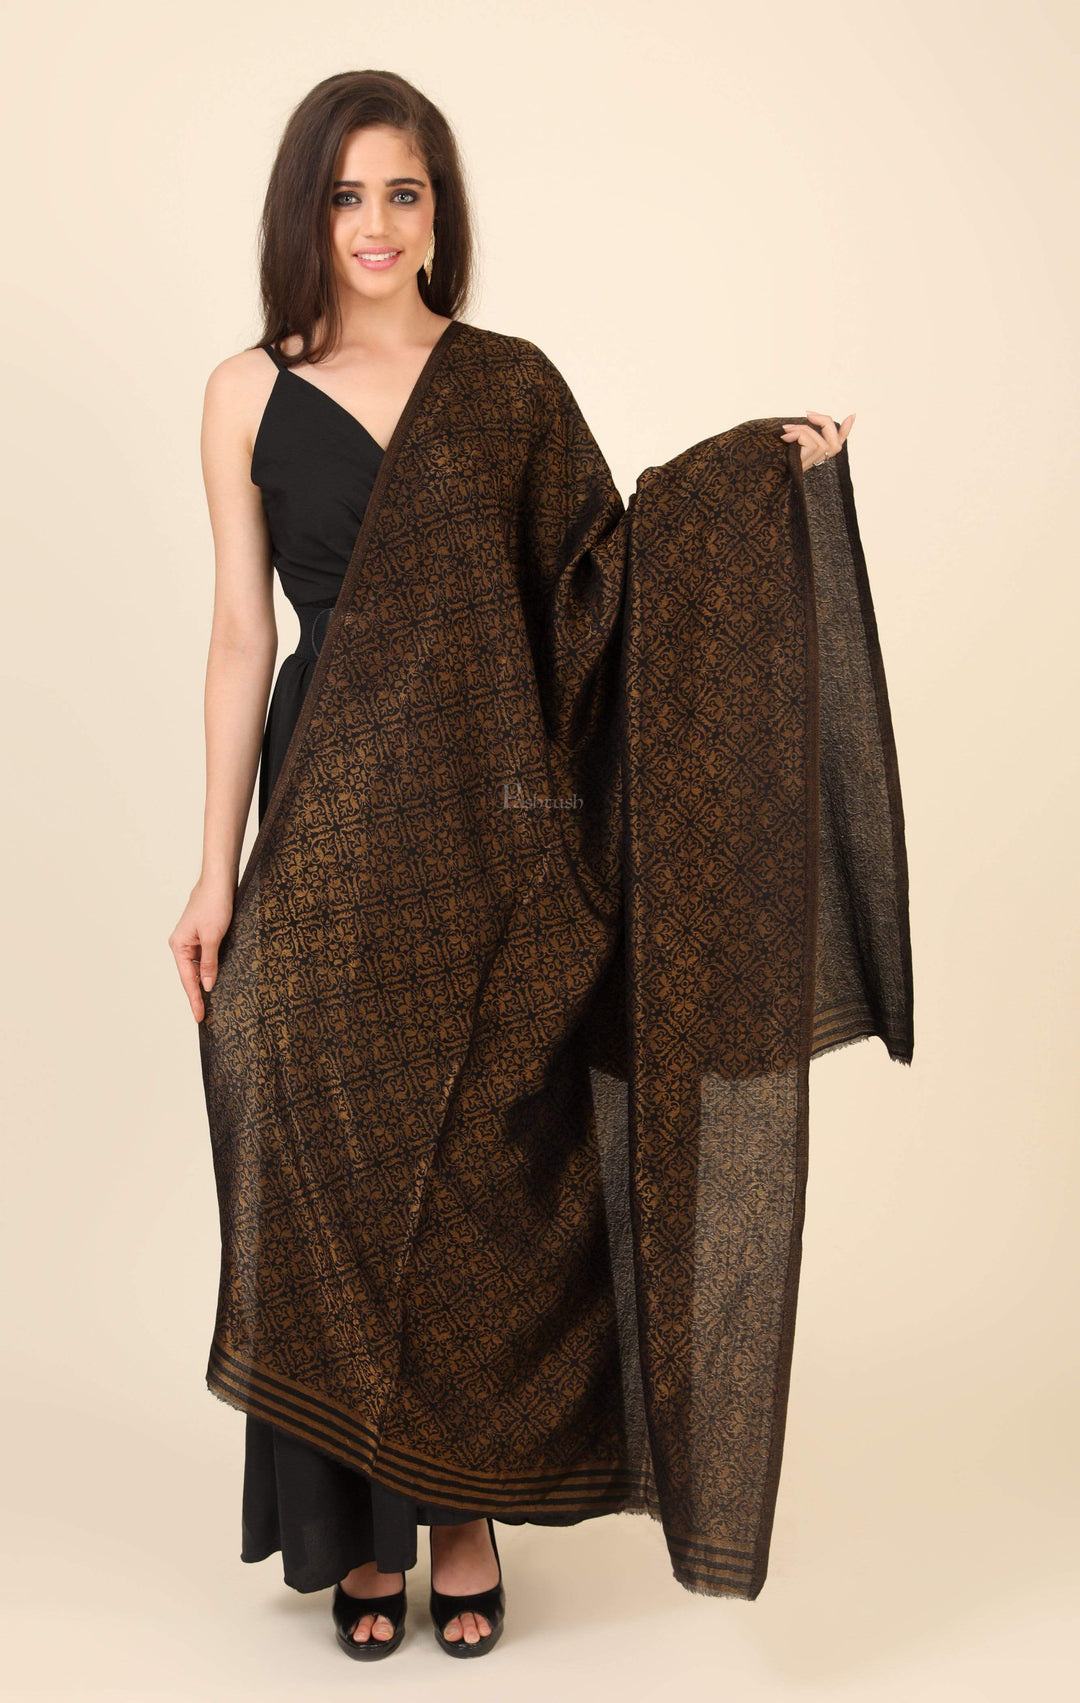 Pashtush India 70x200 Pashtush Womens Twilight Collection, Jacquard Stole, With Metallic Thread Weave, Fine Wool